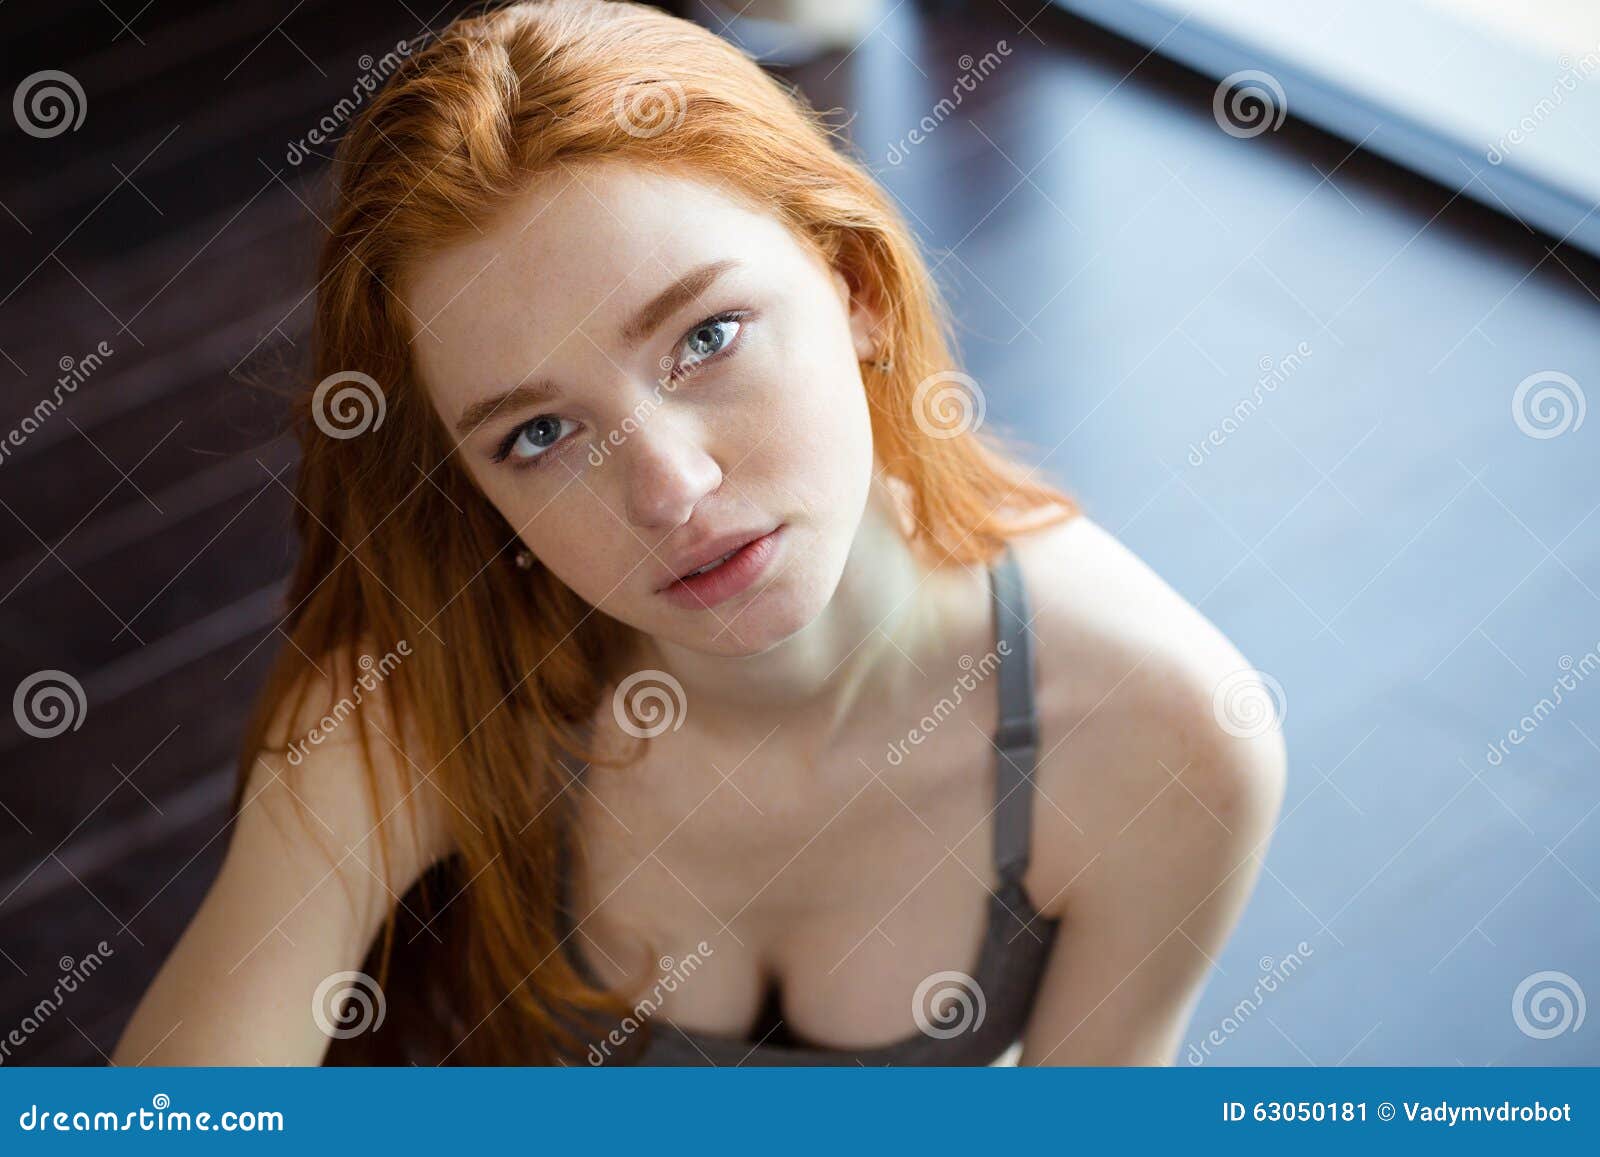 redhead woman sitting on the floor